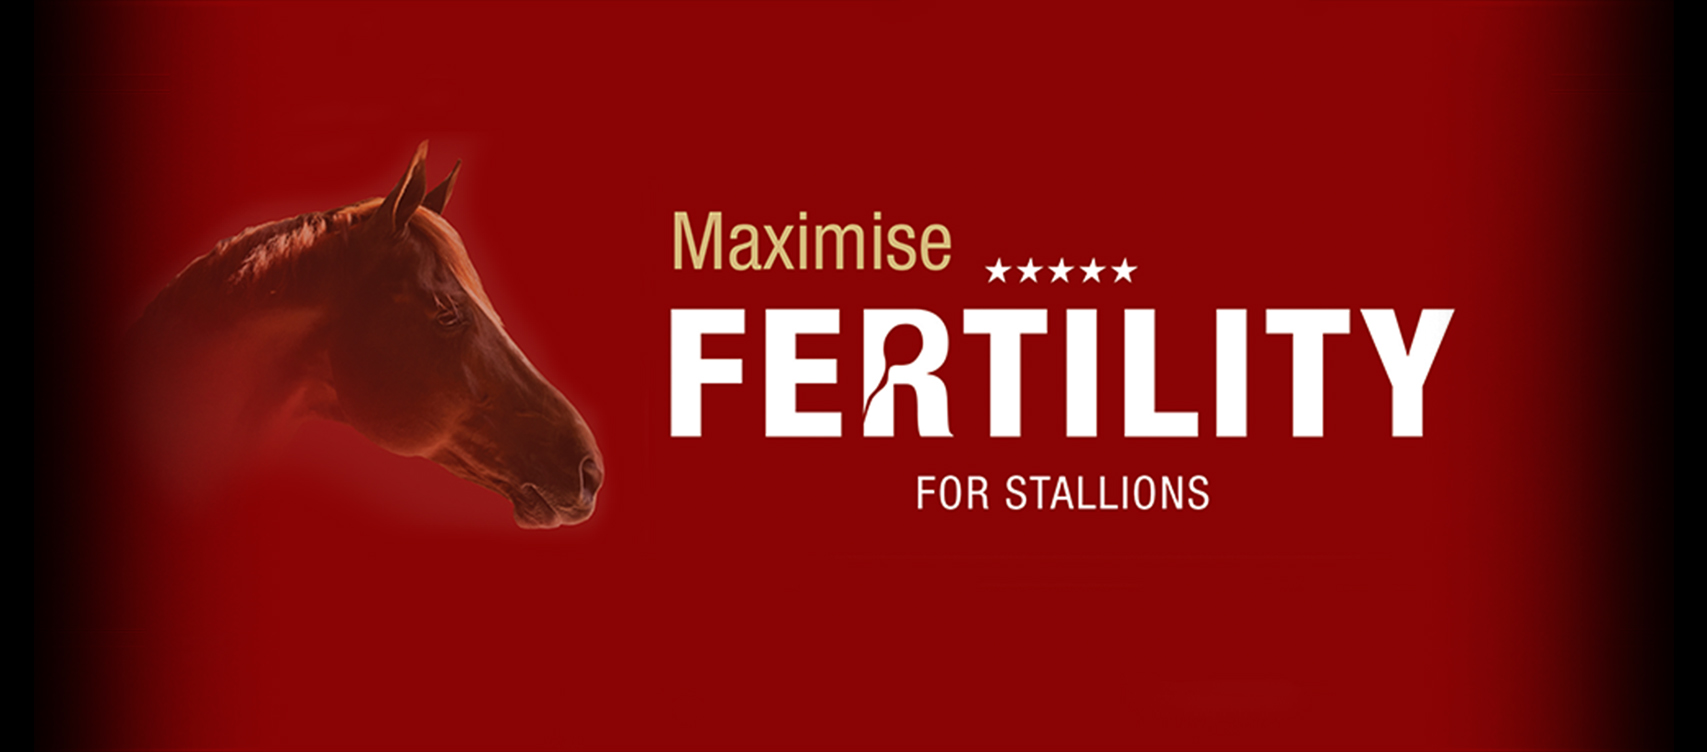 Breeding, formulated to help maximise each stallion’s breeding potential